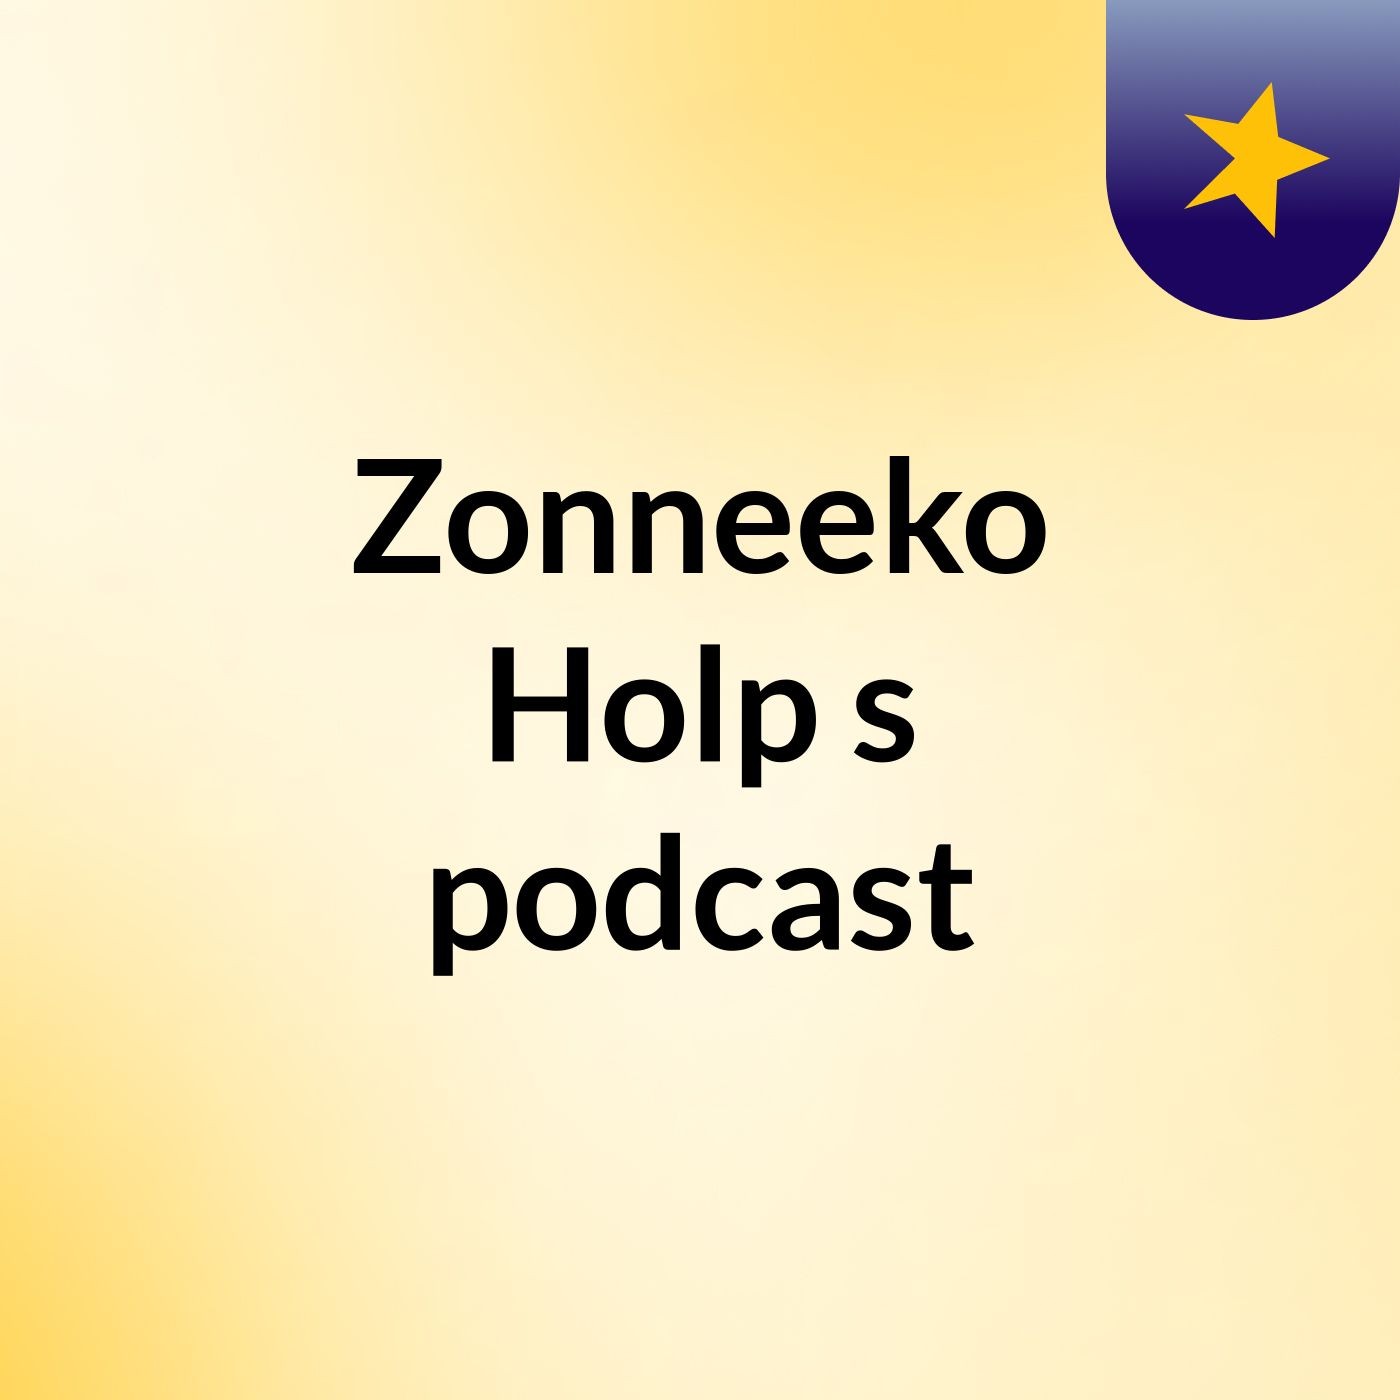 Zonneeko Holp's podcast